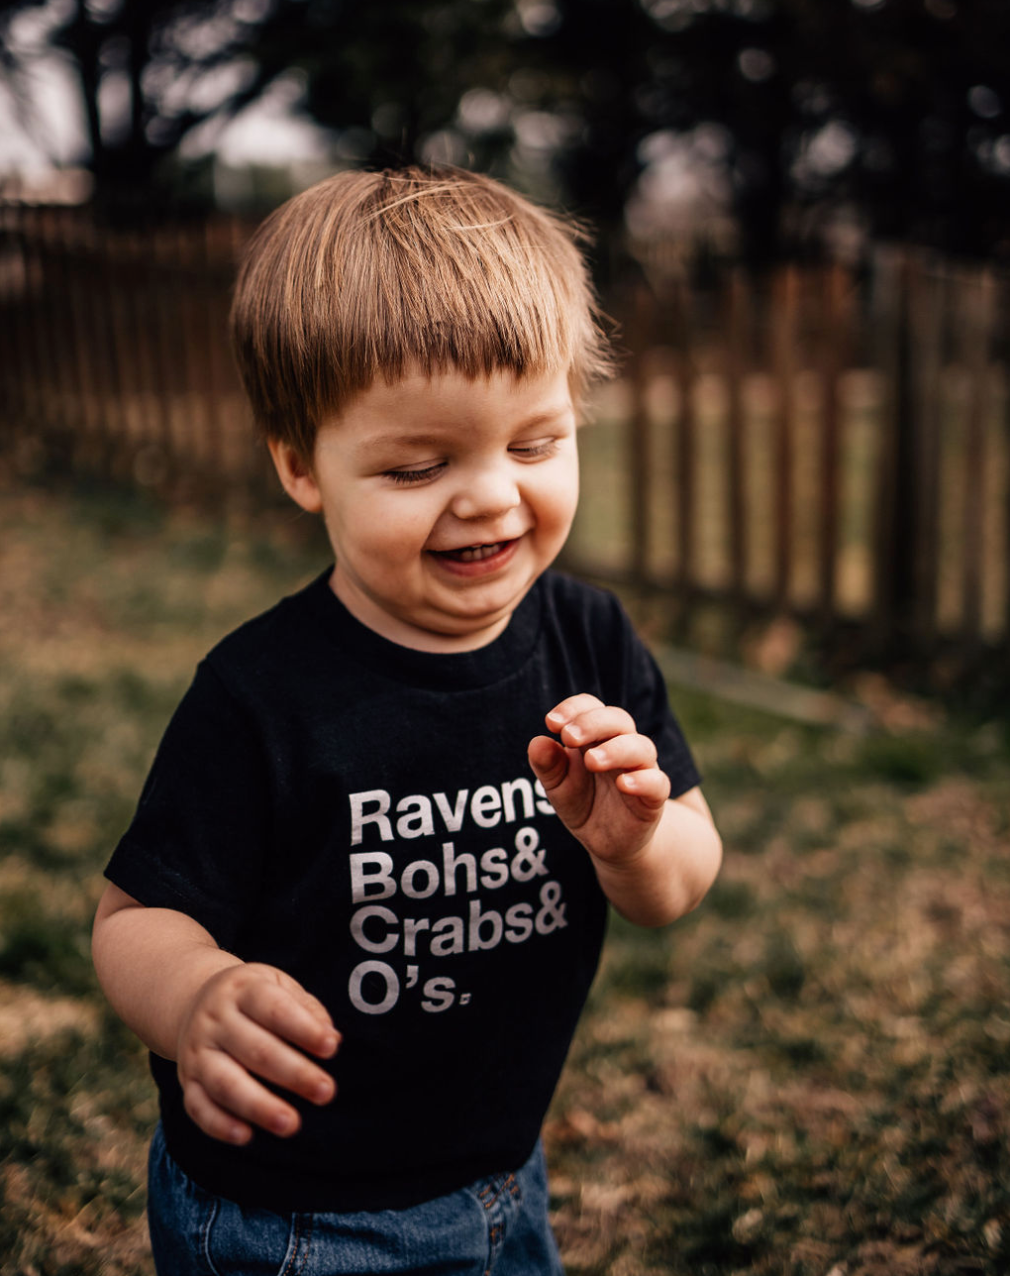 Ravens & Bohs & Crabs & O's (Black) / *Toddler* Shirt - Route One Apparel